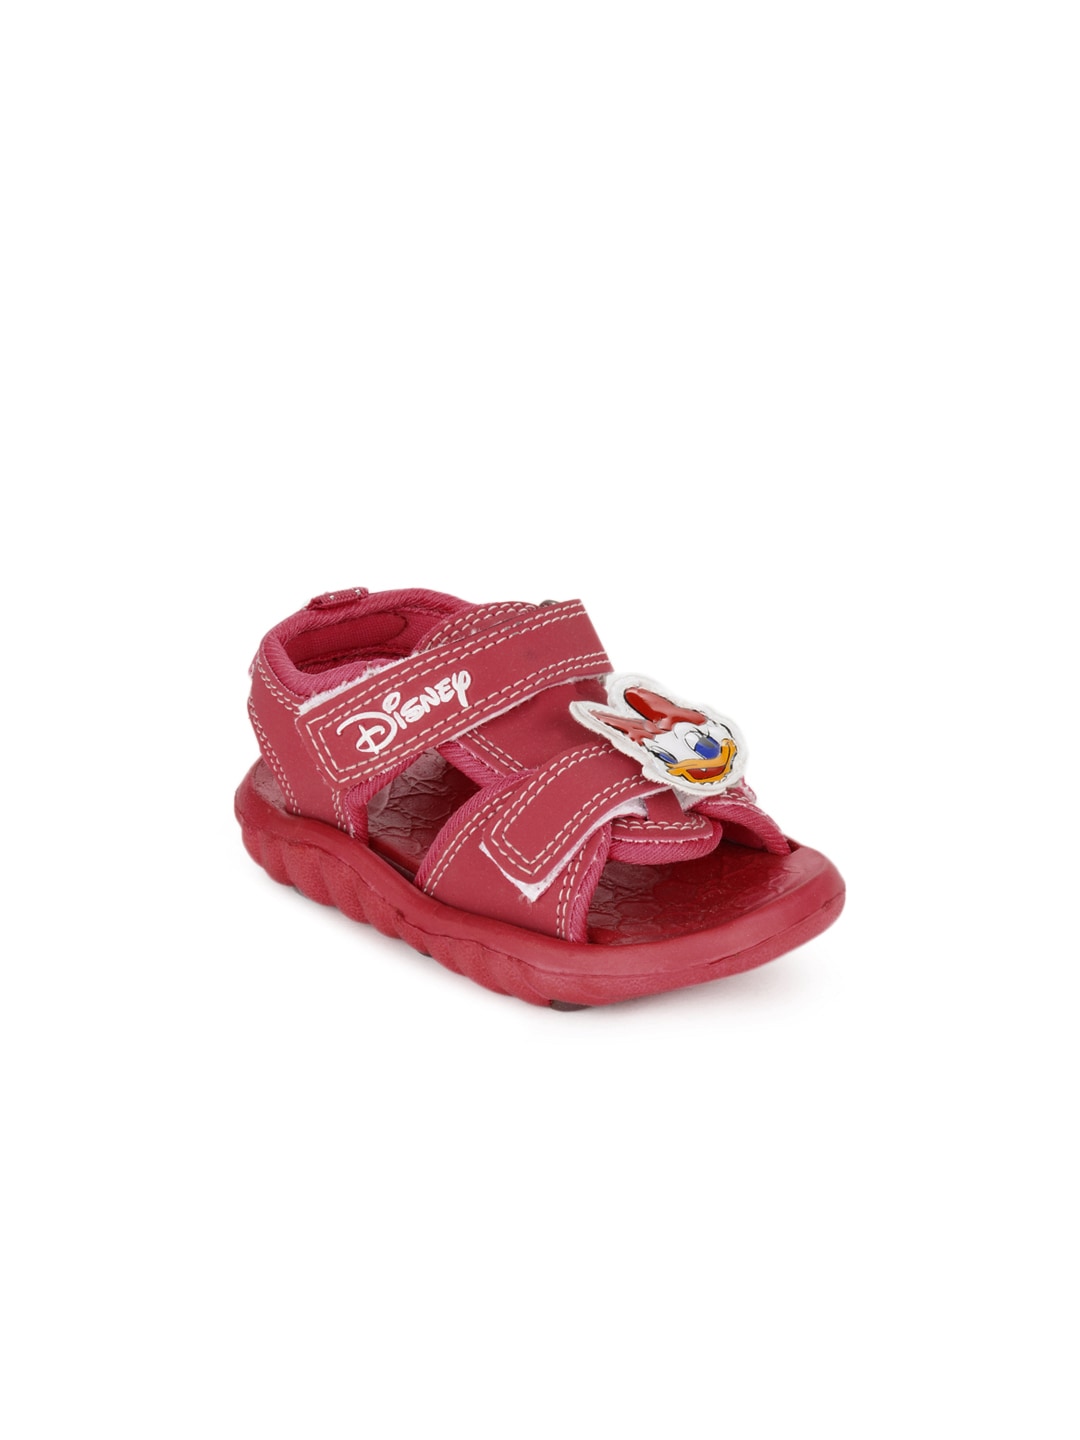 Disney Unisex Kids Daisy Pink Sandals